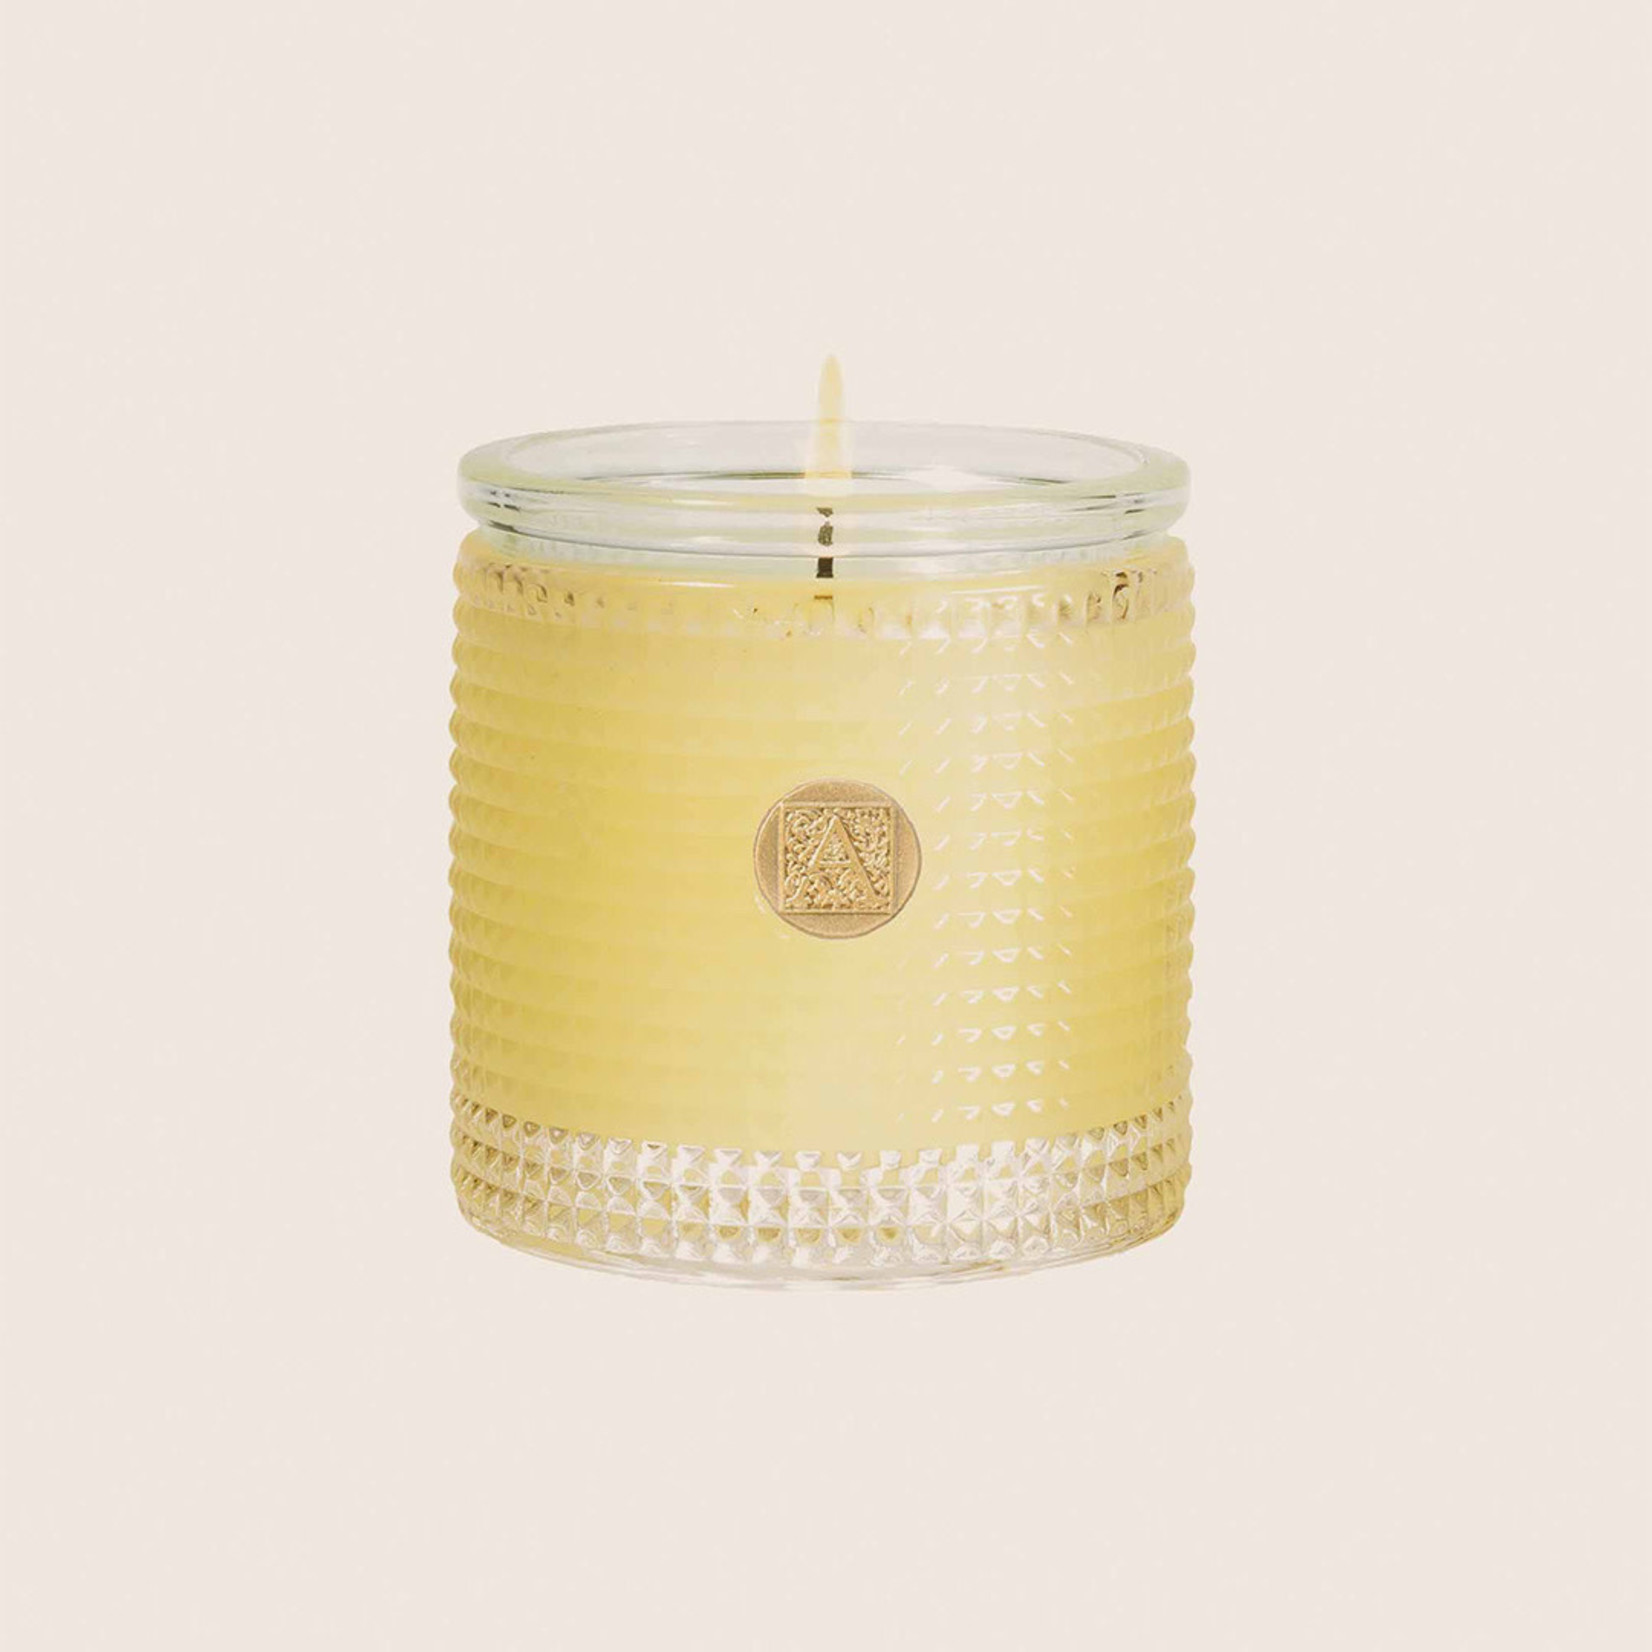 Aromatique Orange & Evergreen - Candle Textured glass 6oz